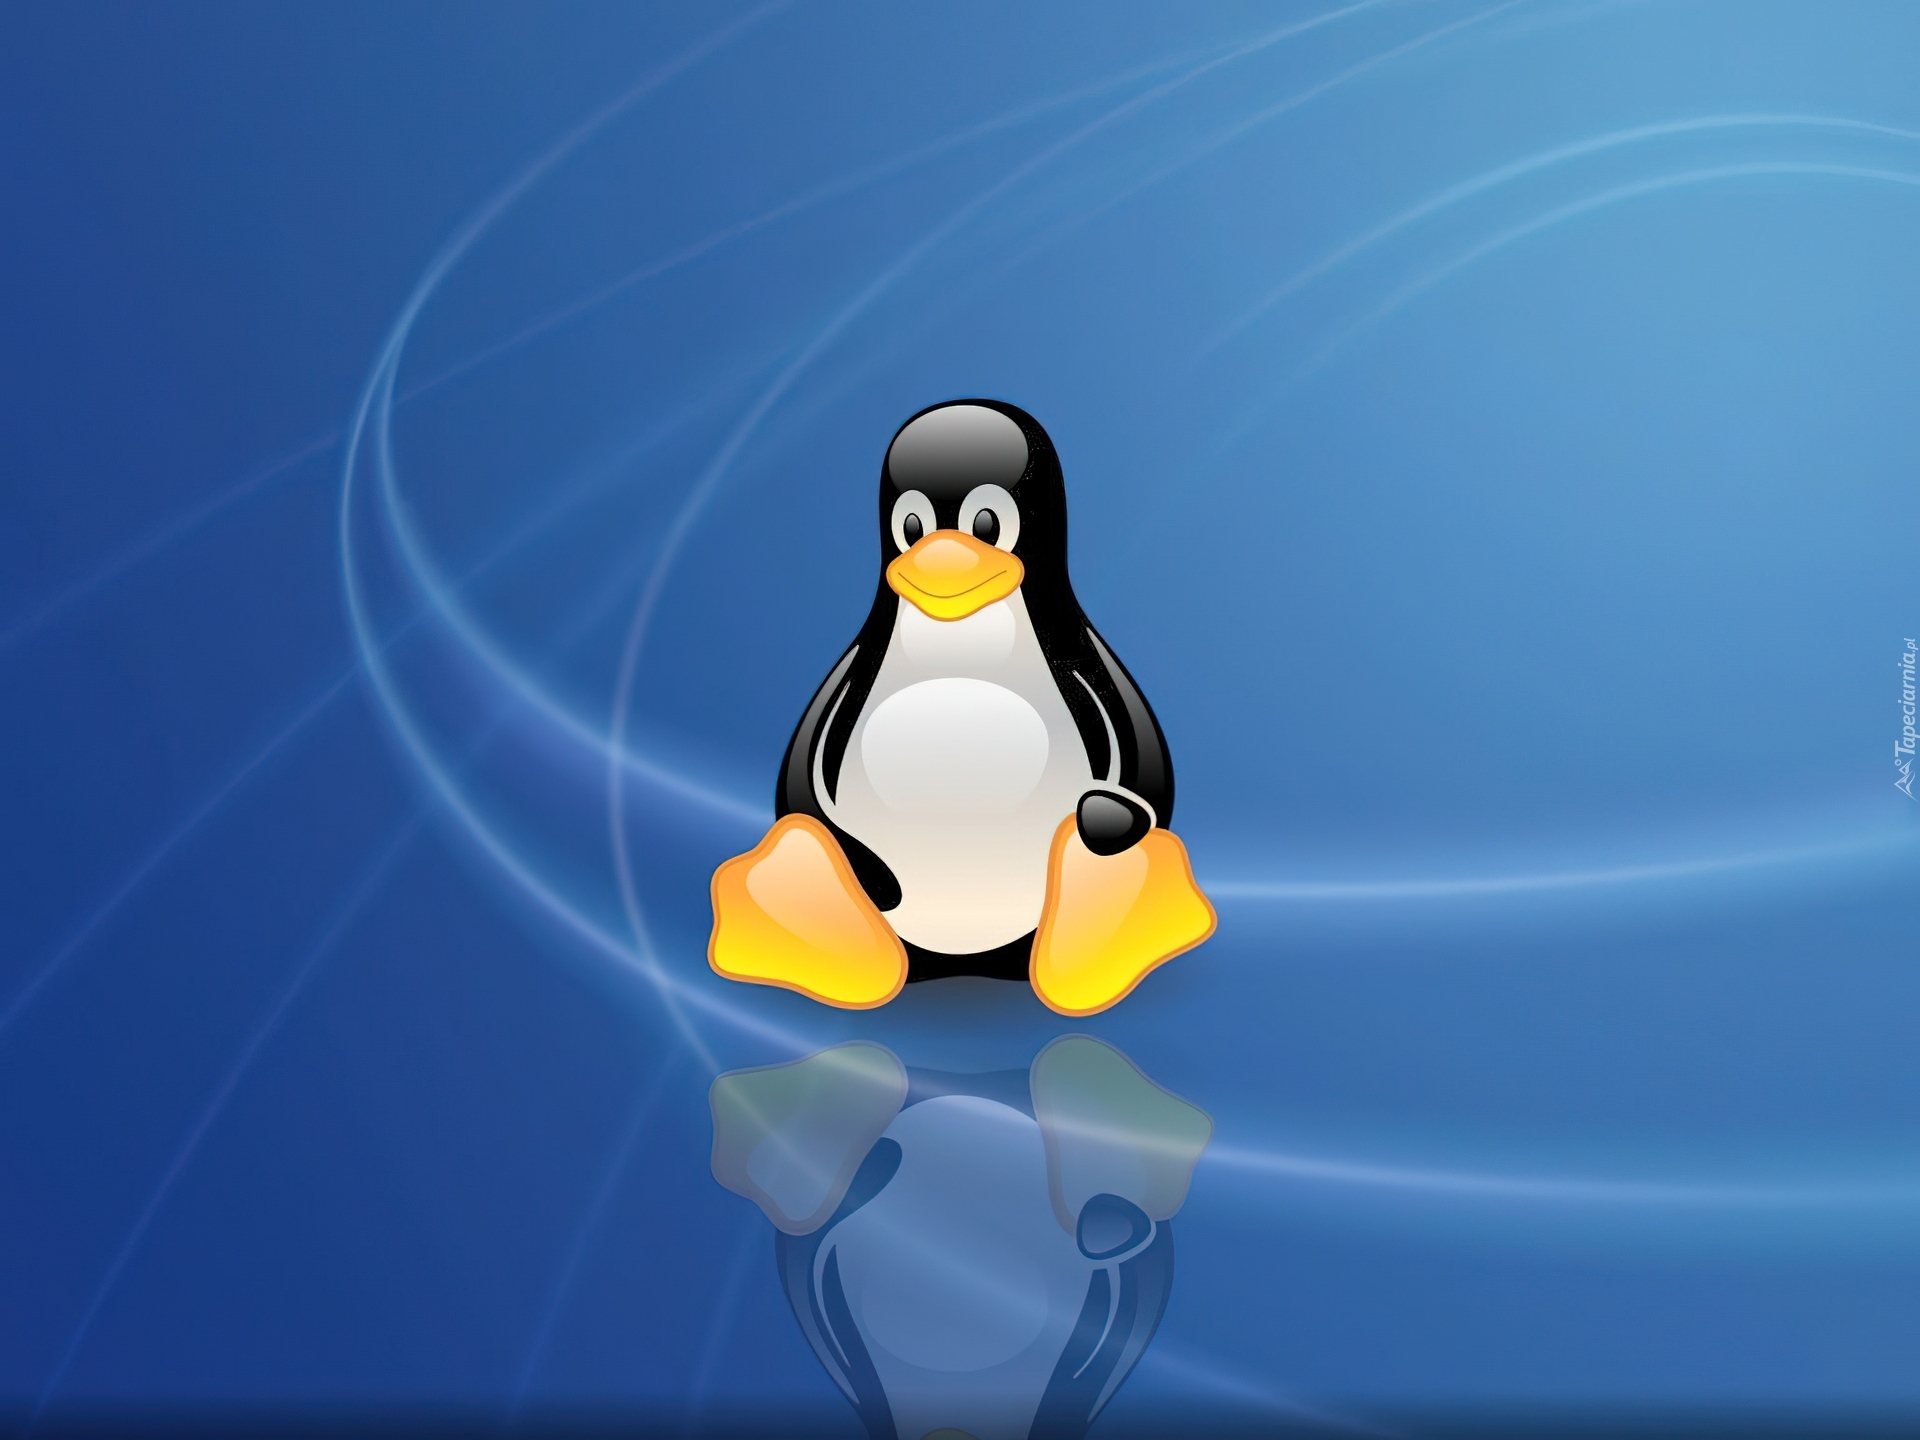 Balena linux. Linux Операционная система. Операционные системы линукс. Оперативная система линукс. Линекс опереционая система.